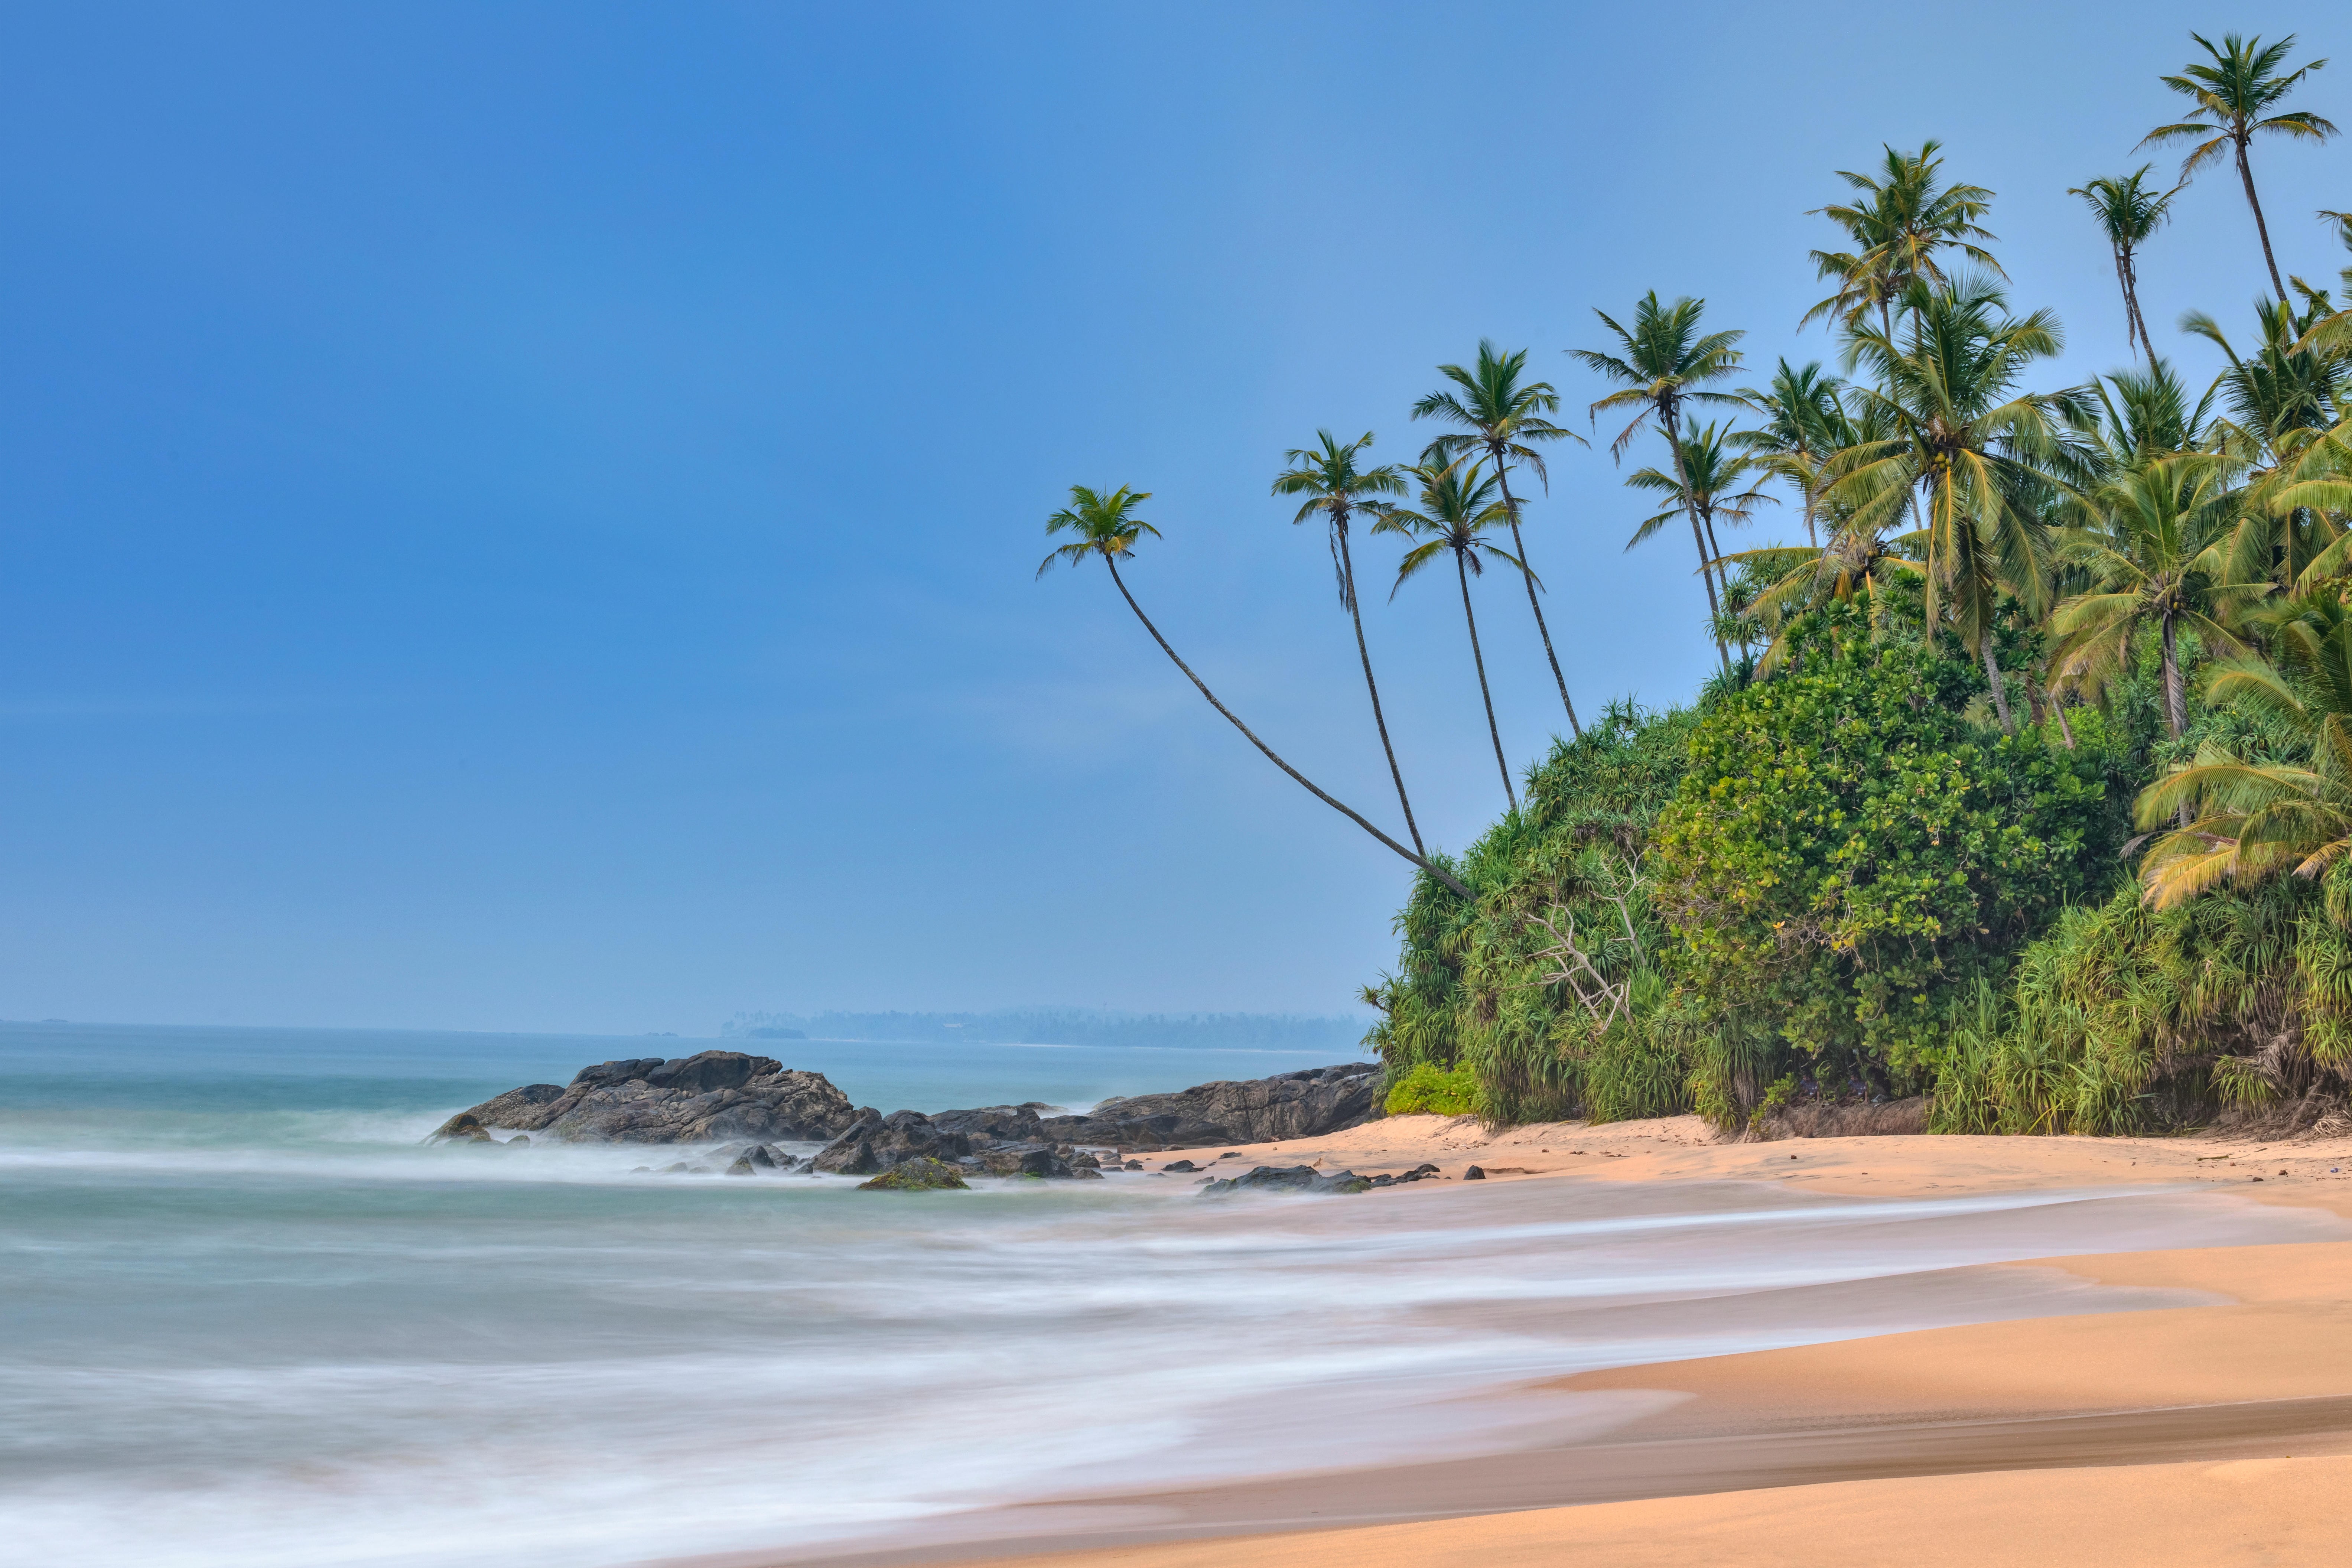 The palm-fringed beach at Dondra, Sri Lanka. Photo: Alamy